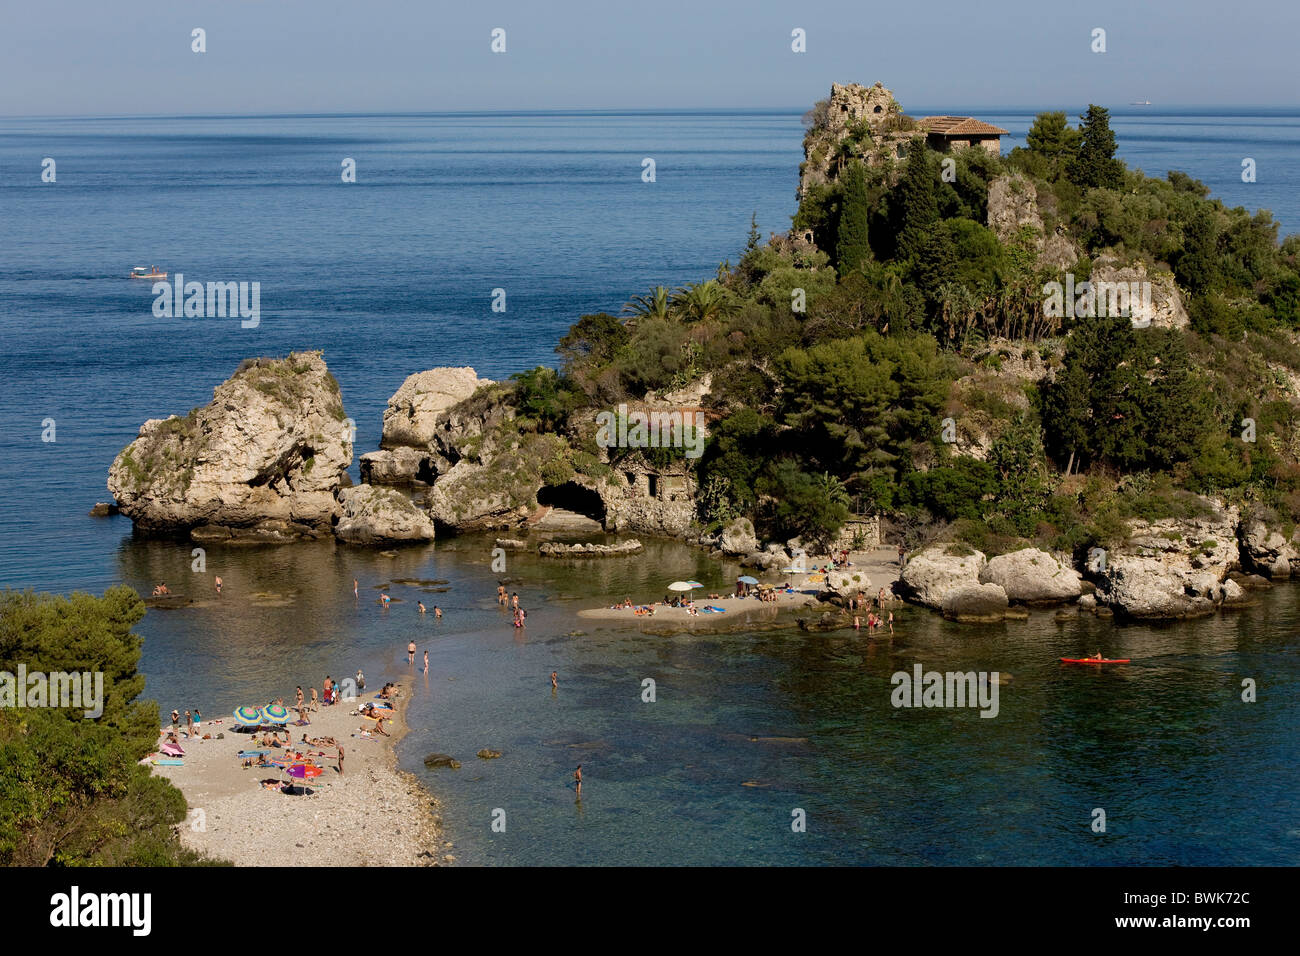 Bay, swimming paradise, Isole Bella, Taormina, province of Messina, Sicily, Italy, Europe Stock Photo